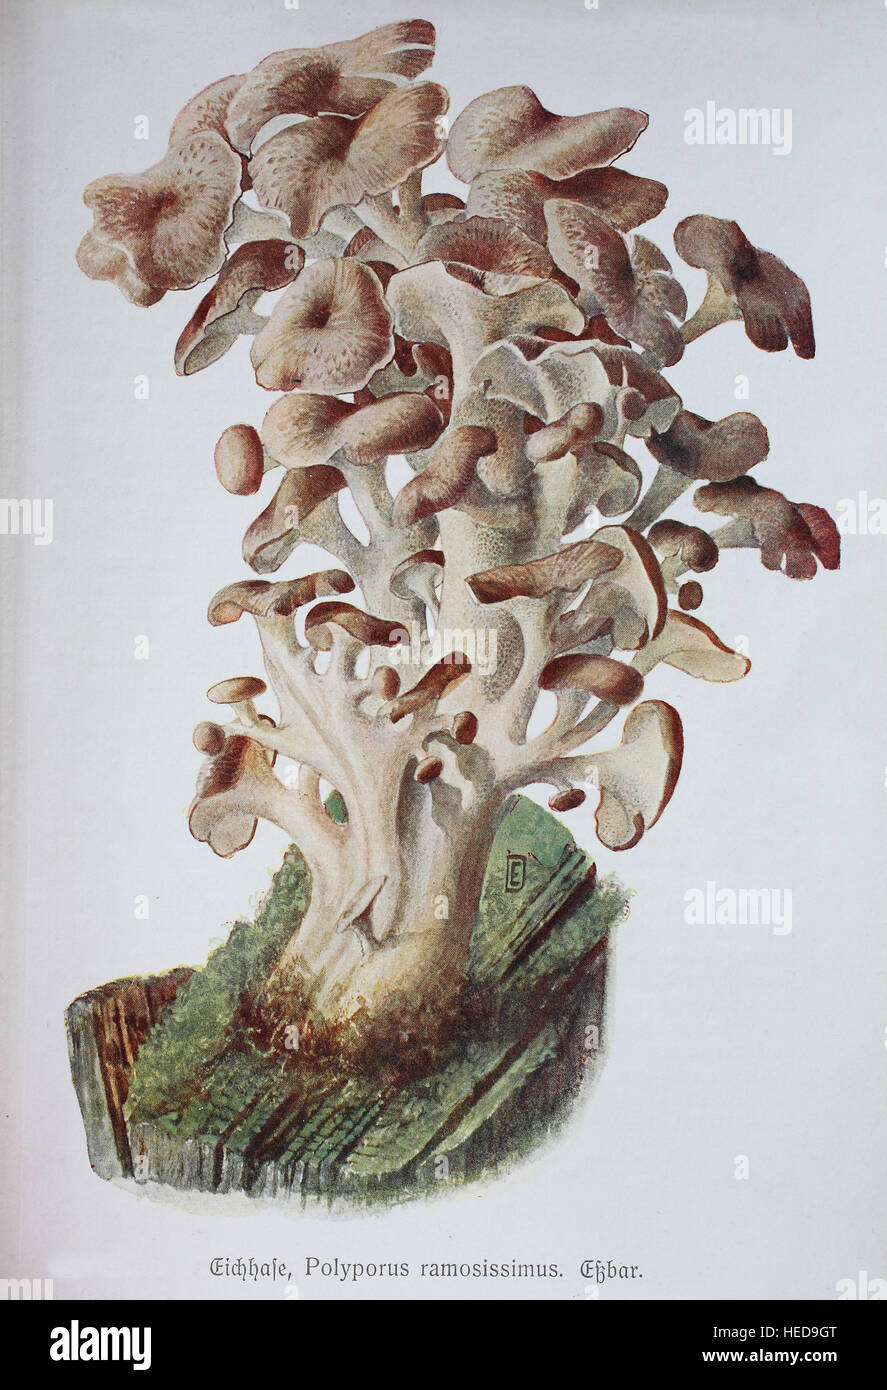 Eichhase, Polyporus ramosissimus oder Polyporus umbellatus Pers., digitale Reproduktion einer Illustration von Emil Doerstling (1859-1940) Stock Photo